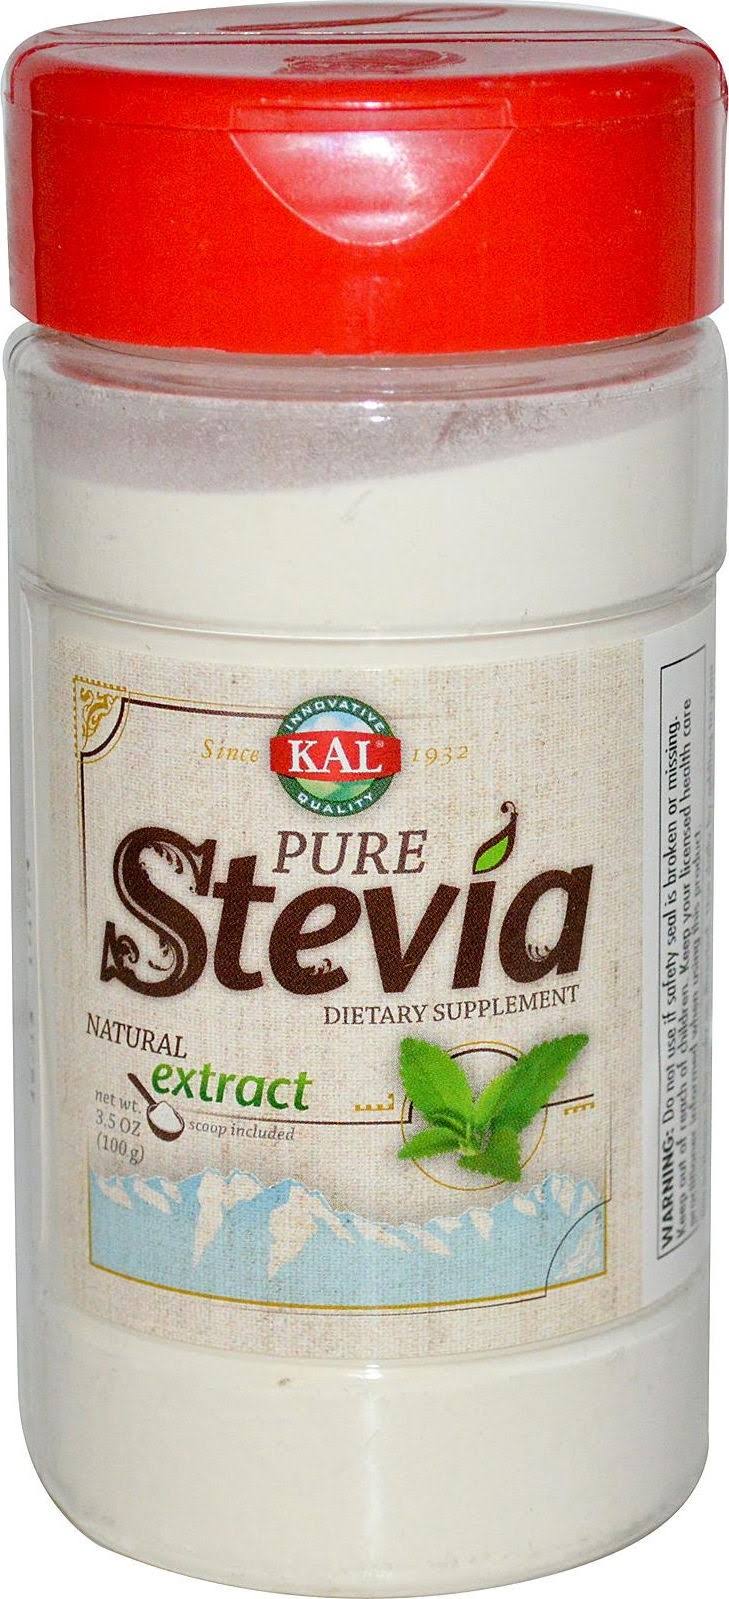 Kal Pure Stevia Extract Powder - 3.5 oz